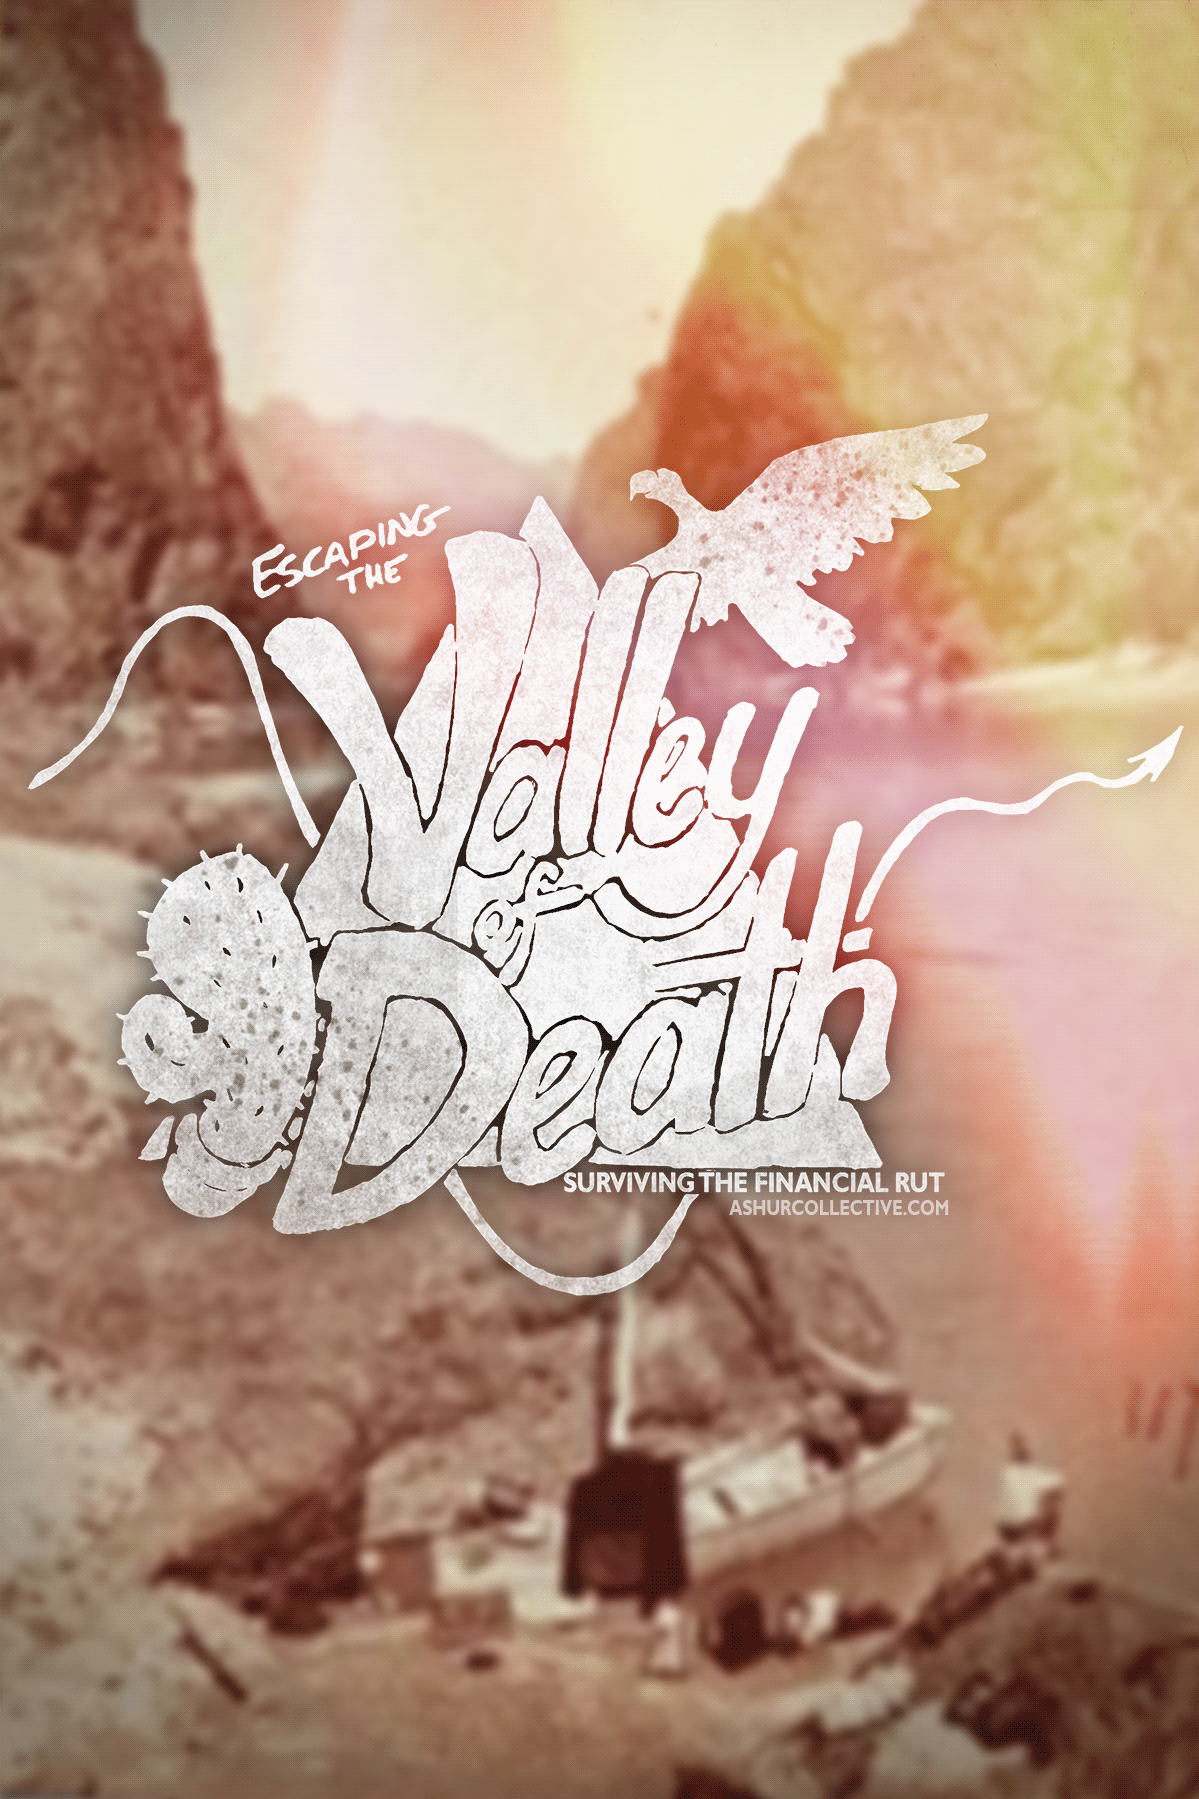 desert business valley of death historical photo logo